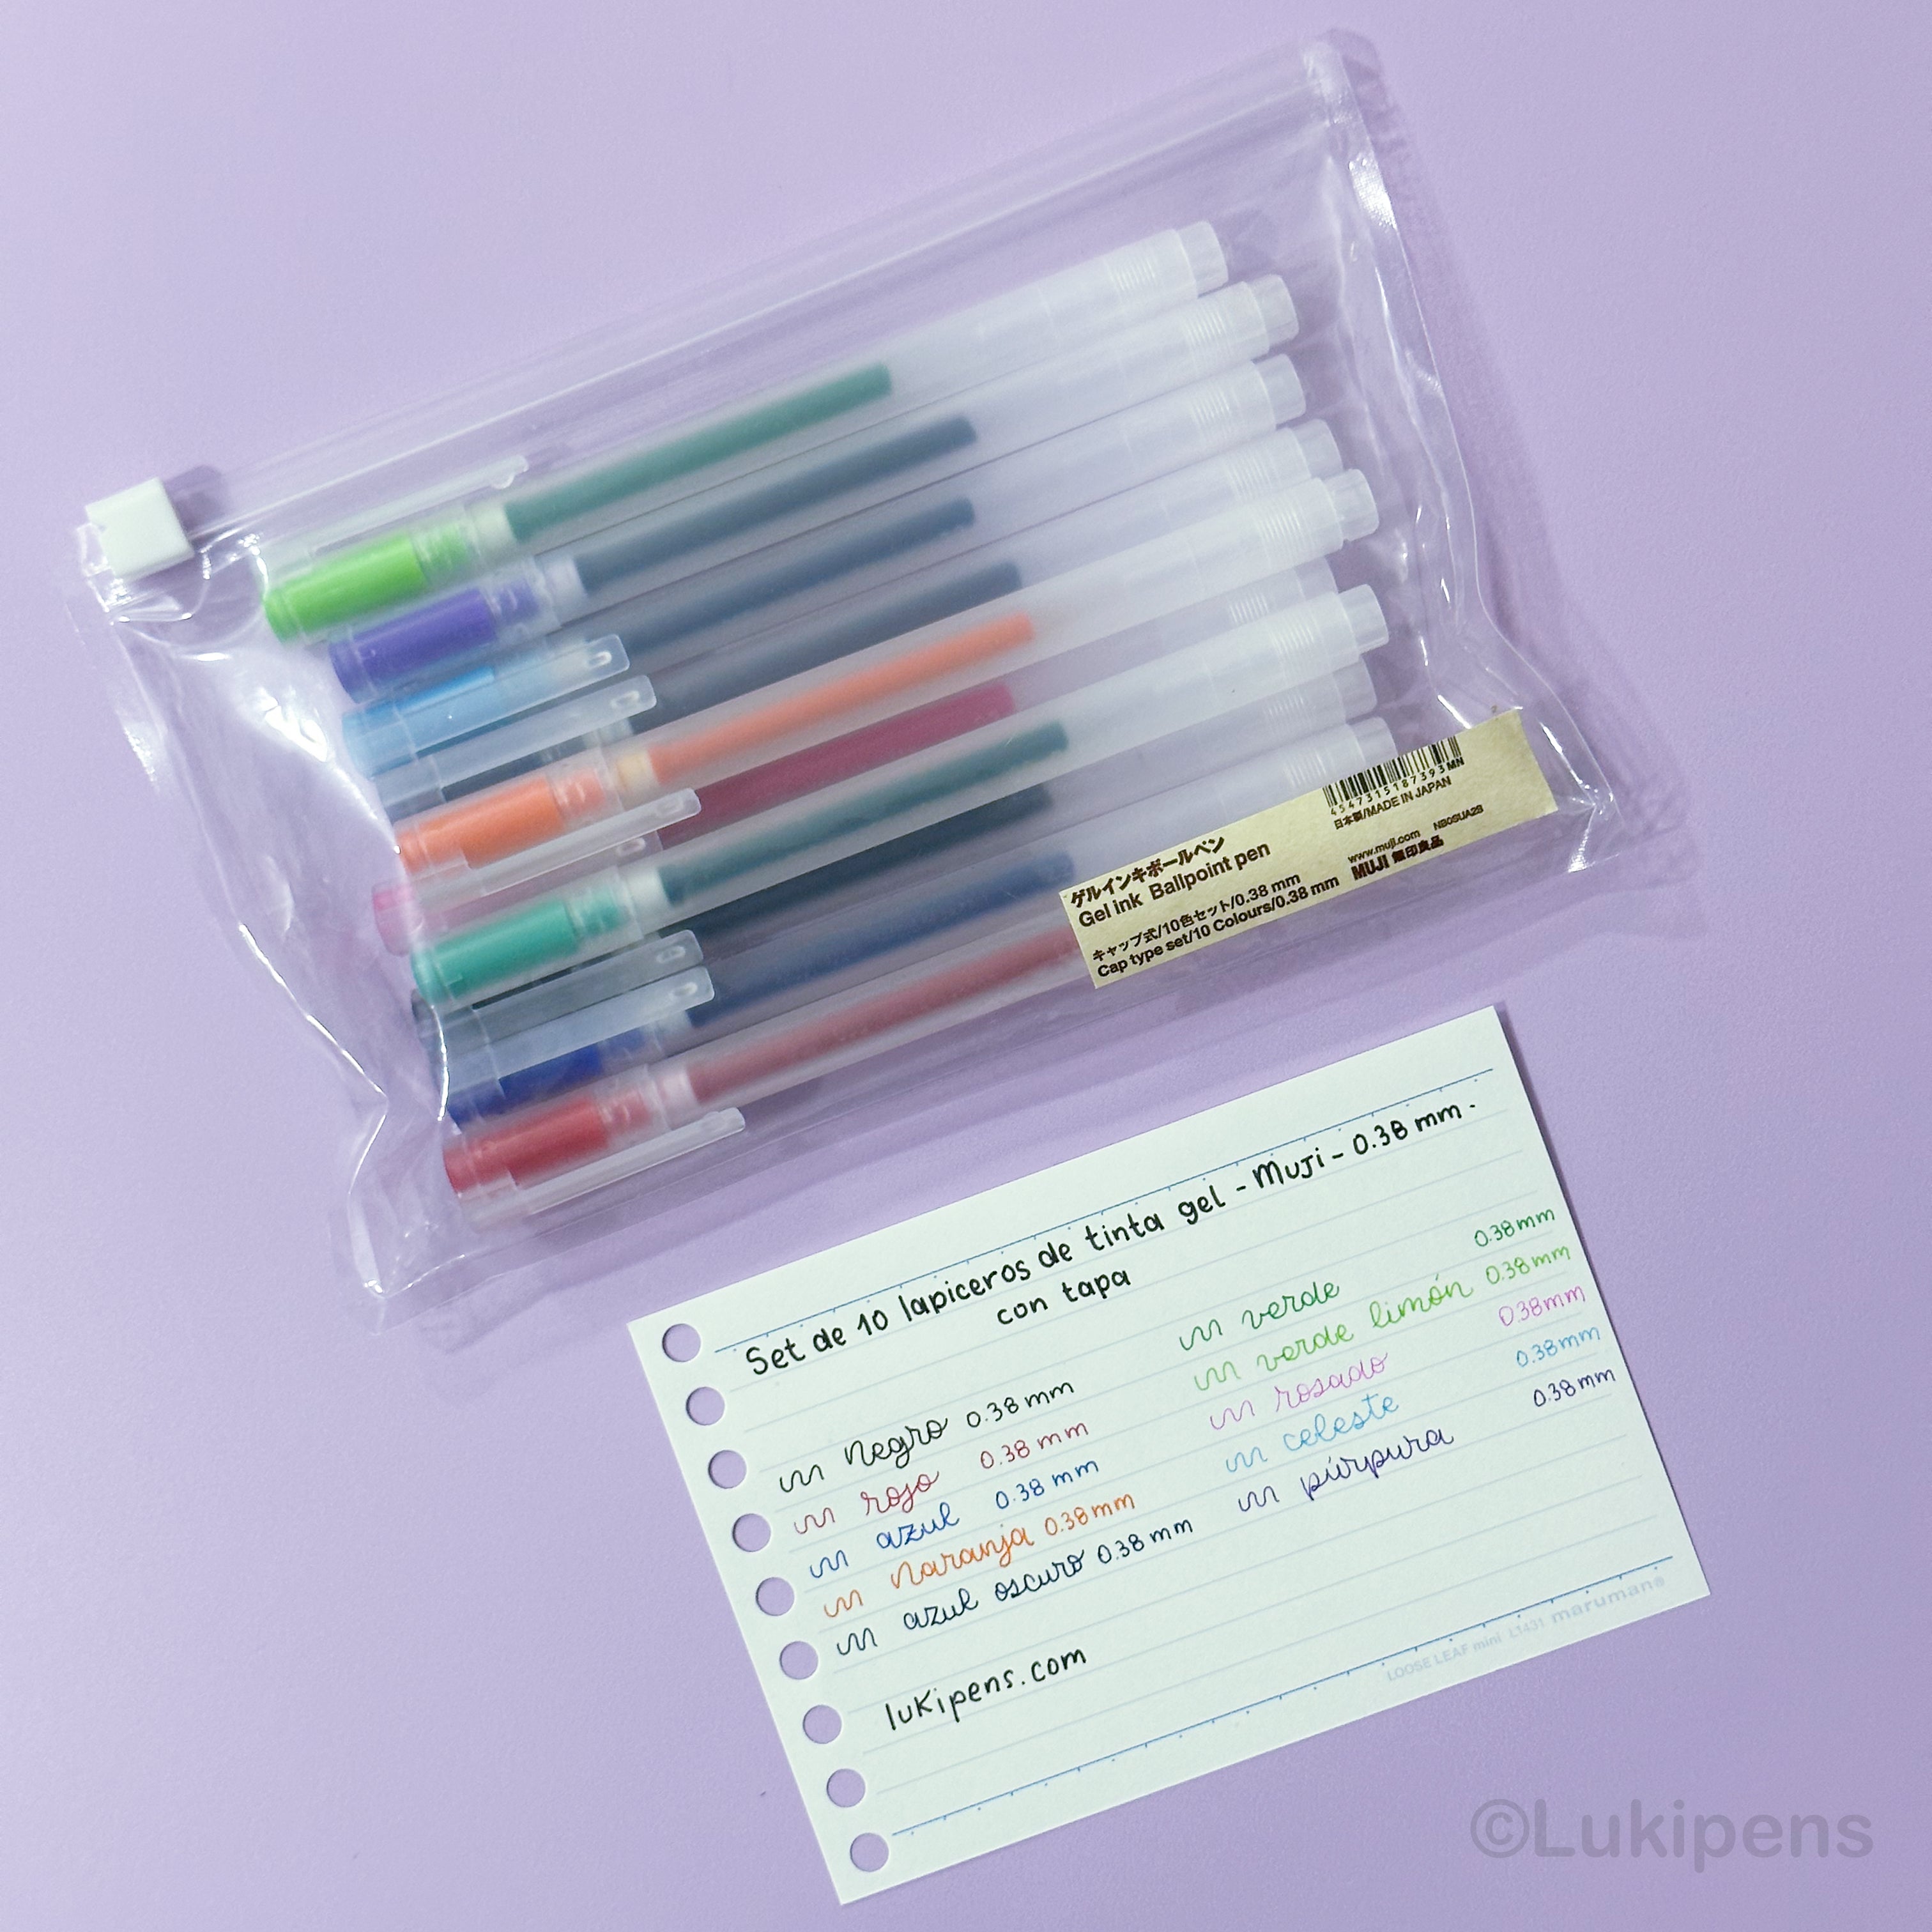 Bolígrafos de gel de varios colores 0.38 mm (Pack de 10)